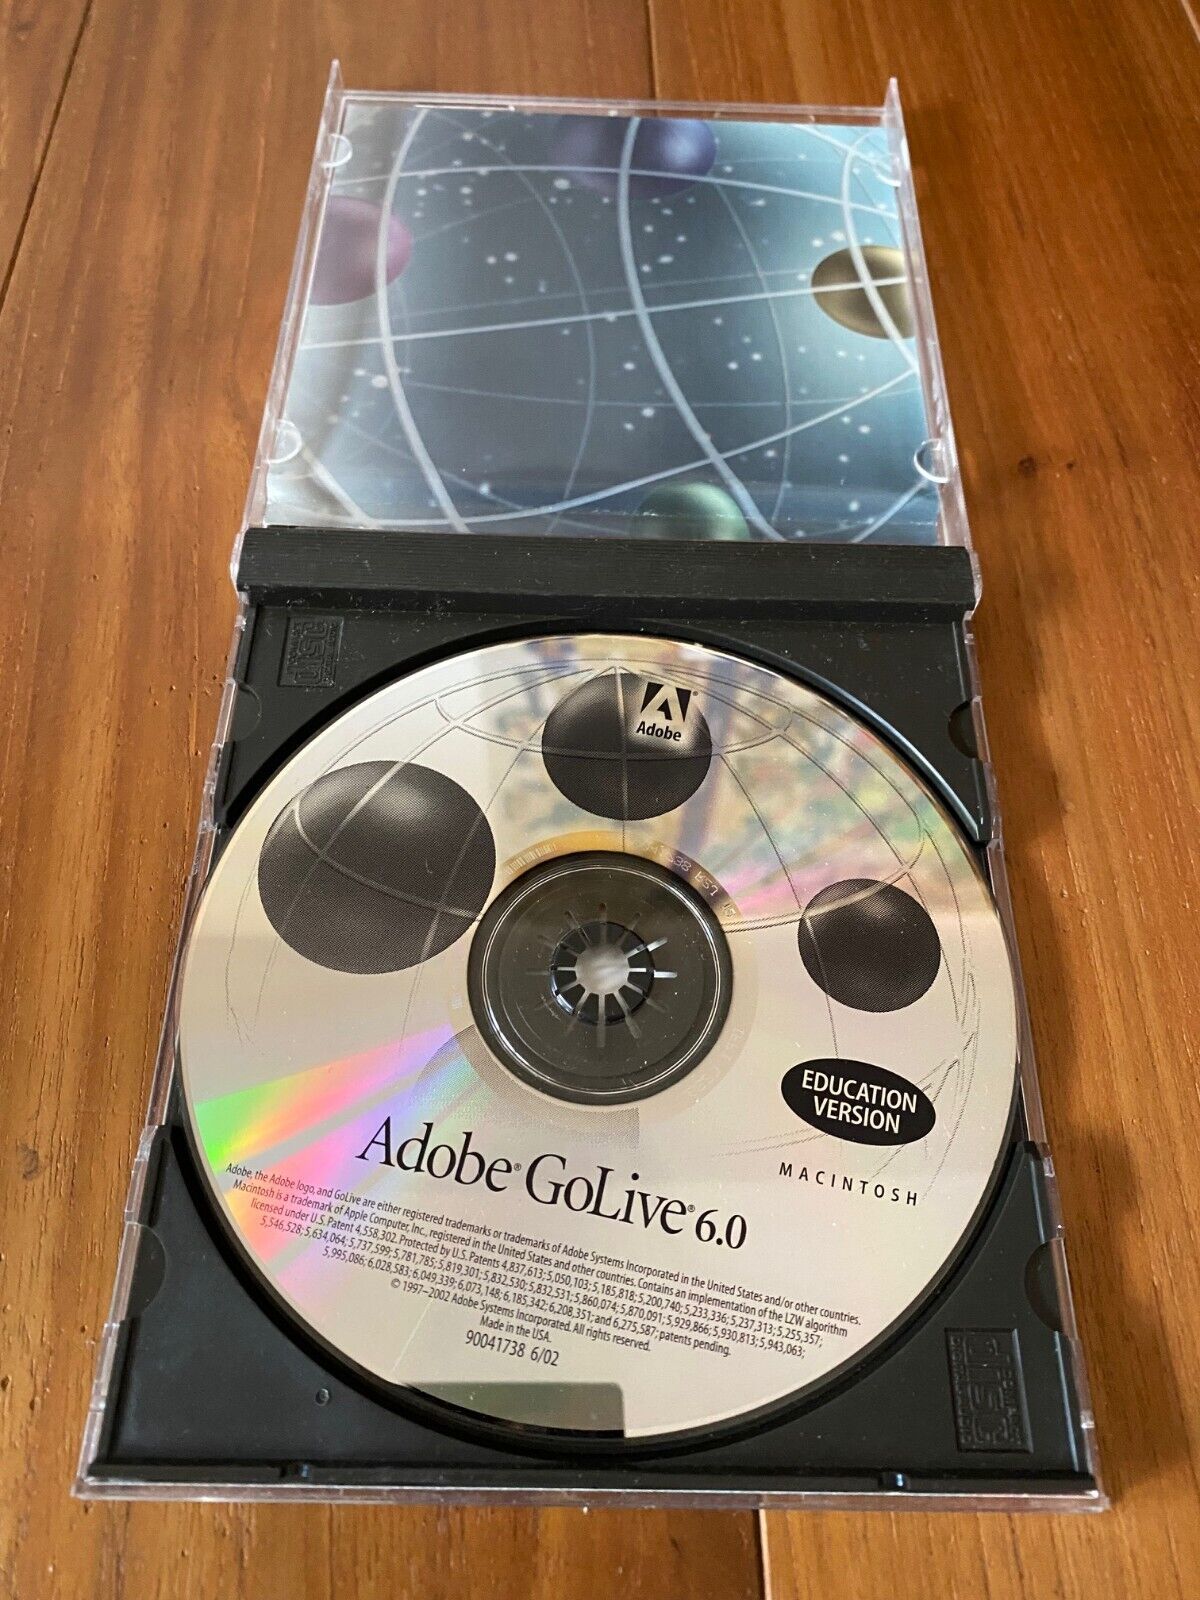 Adobe Go Live 6.0 2001 Education Version